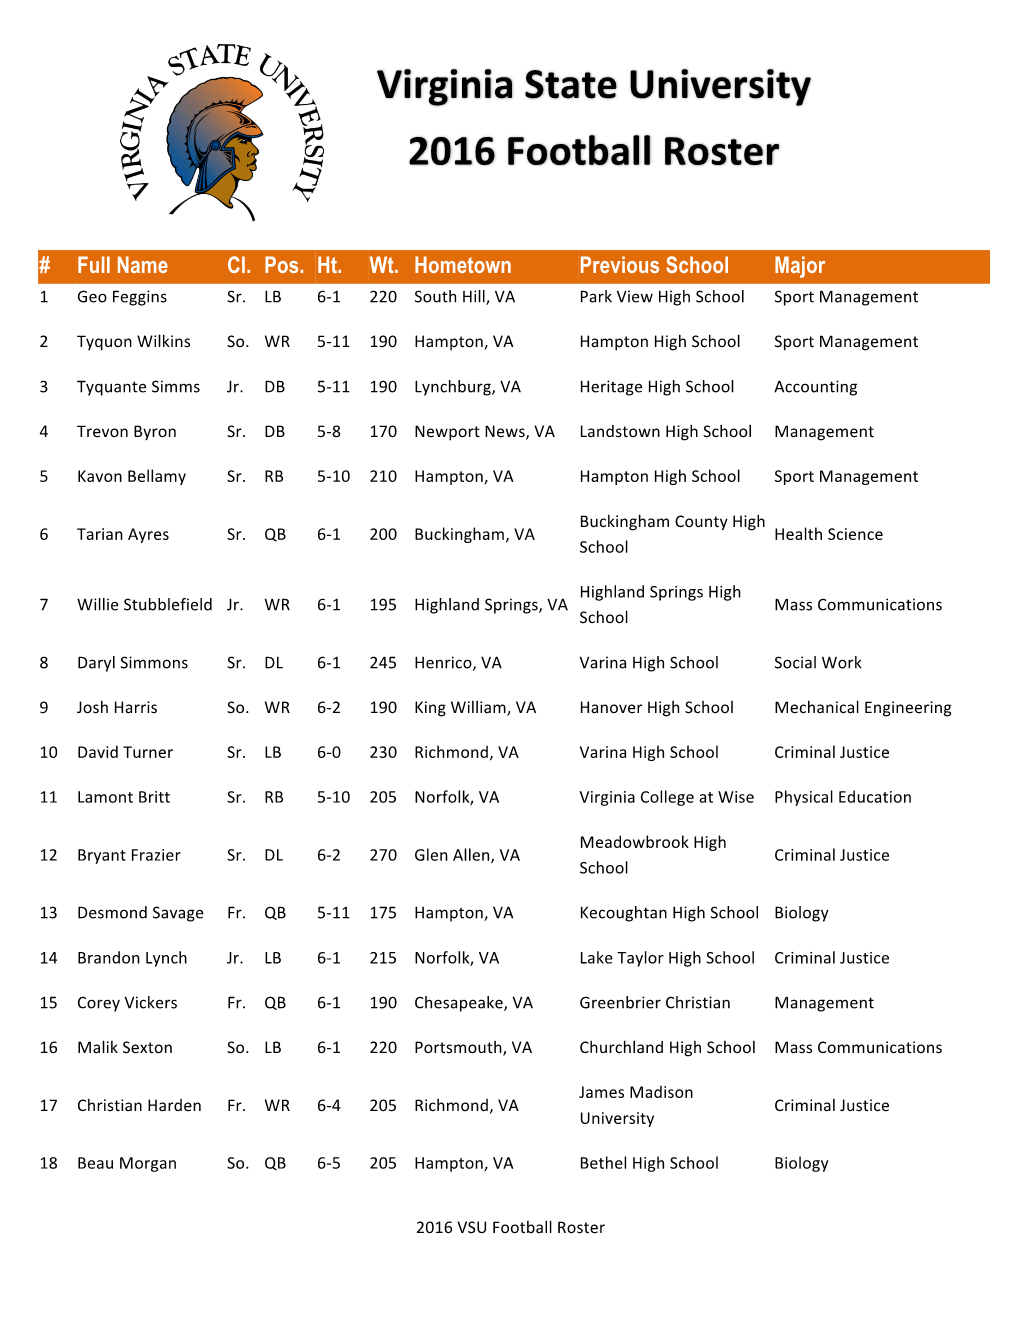 Virginia State University 2016 Football Roster